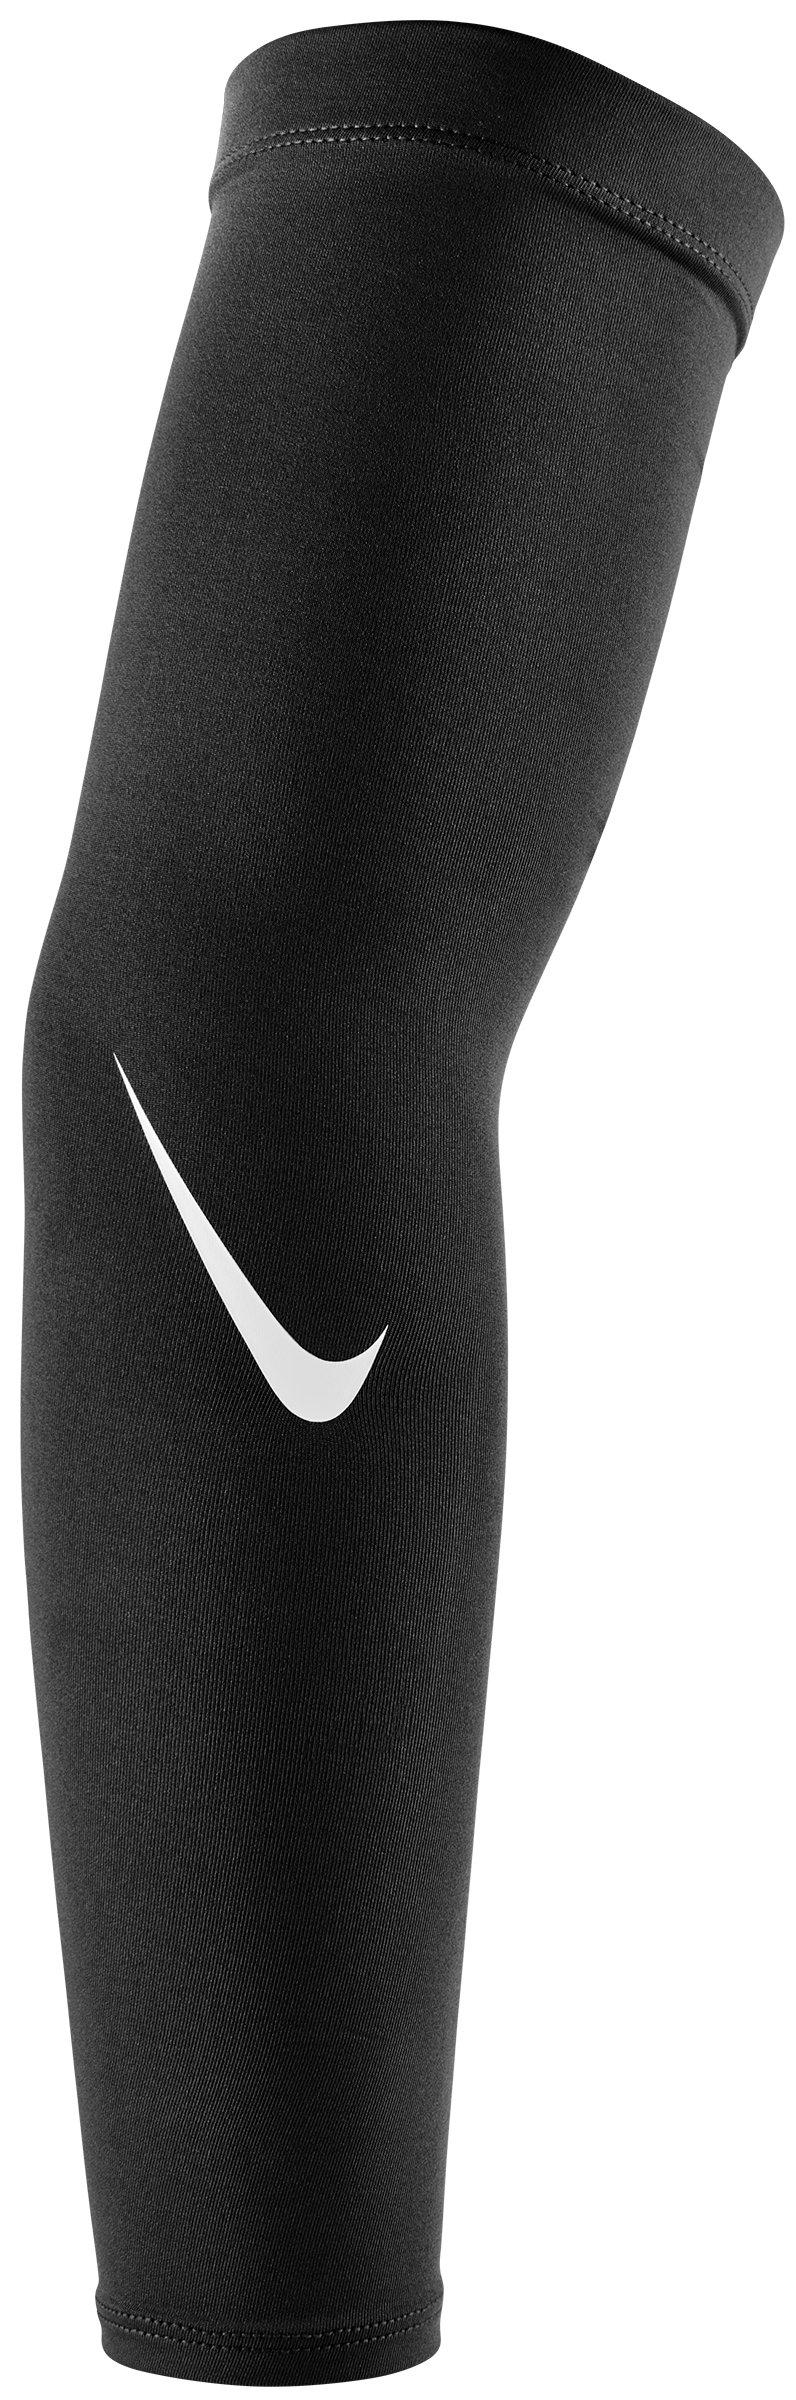 Nike Pro Circular Knit Compression Arm Sleeves Black/White - Yahoo